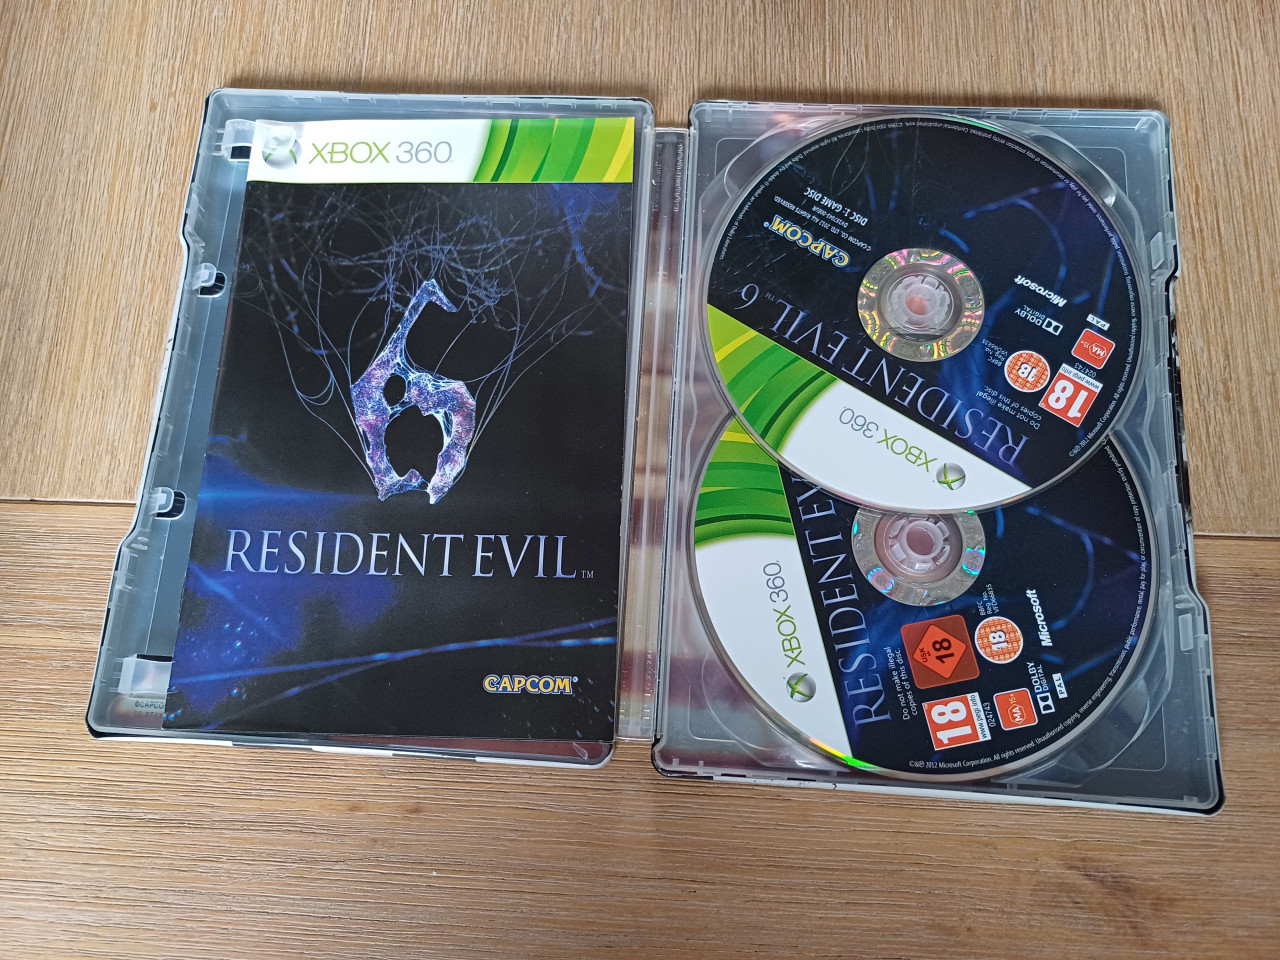 Resident evil steelbook xbox 360